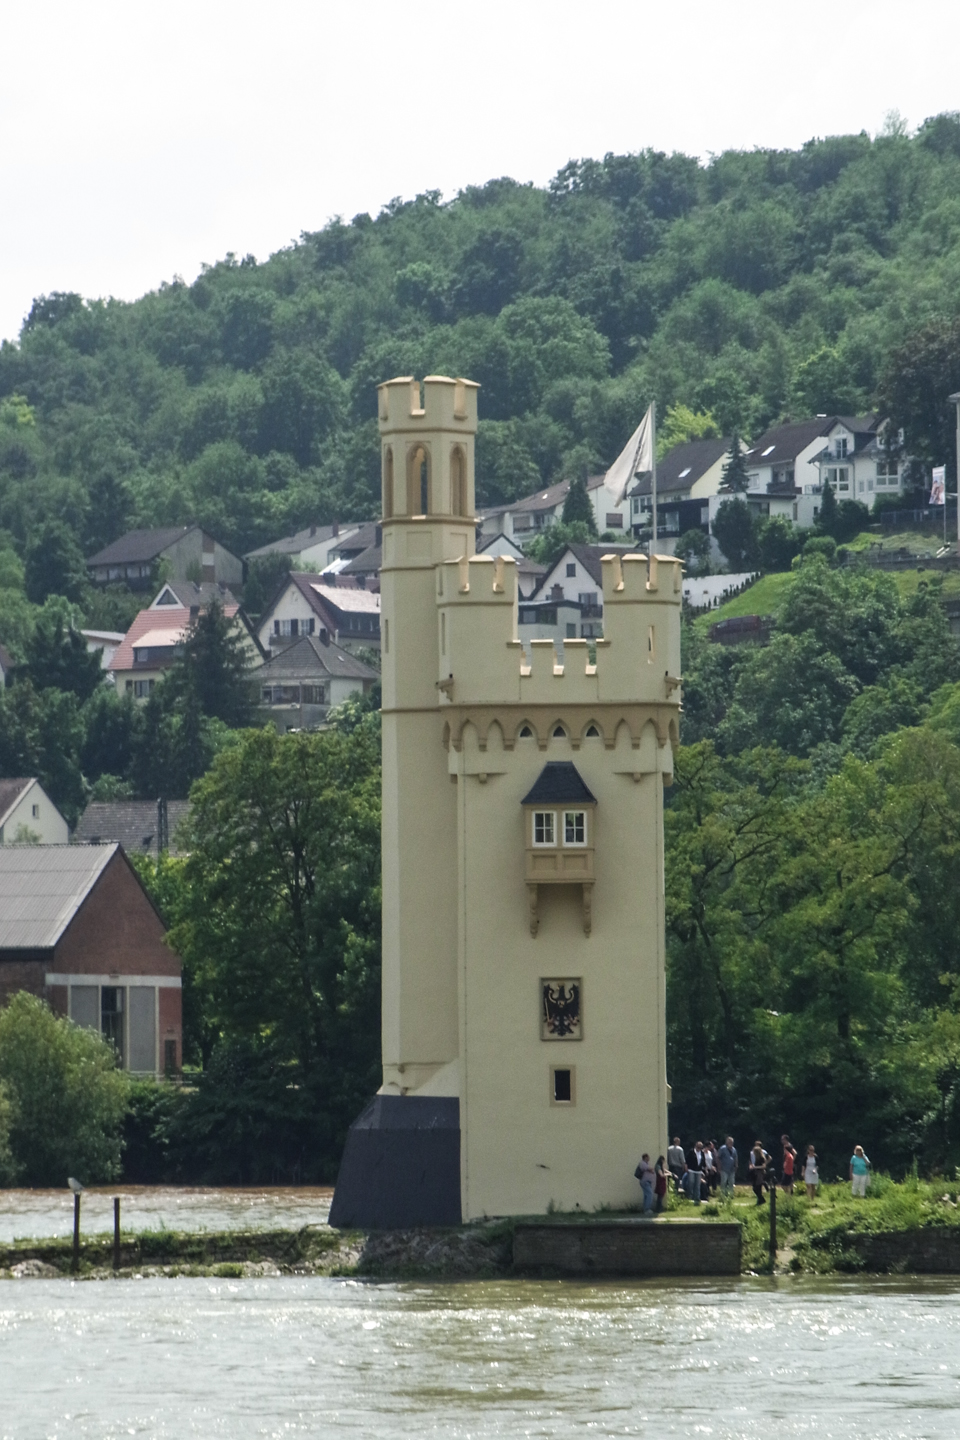 Mäuseturm (Mouse Tower) customs collection tower - 14th century origins!